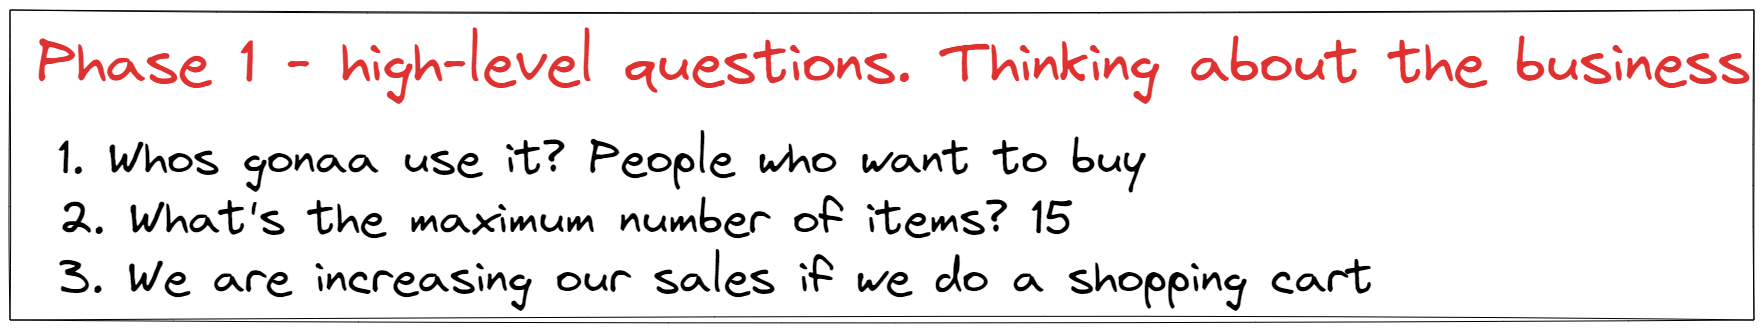 Create a draft. Make assumptions. Ask questions.